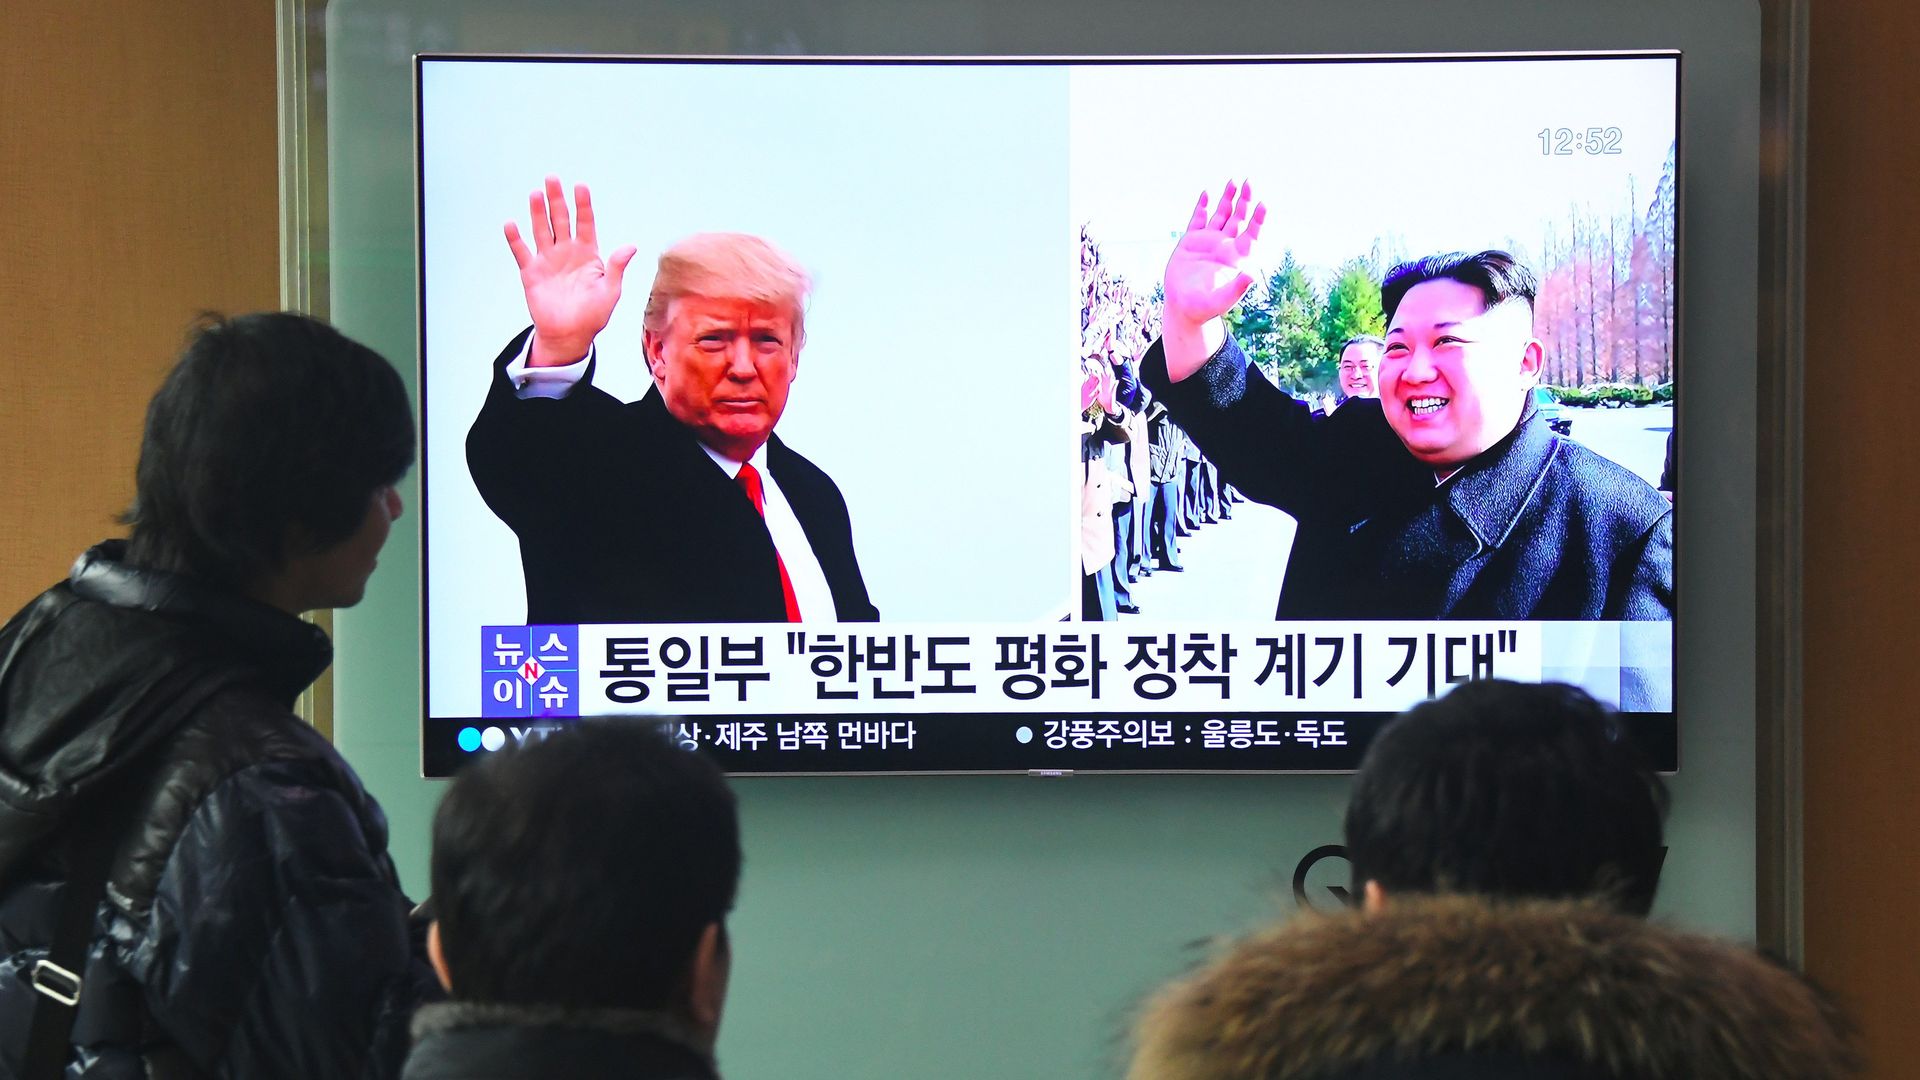 TV screen showing Donald Trump and King Jong-un